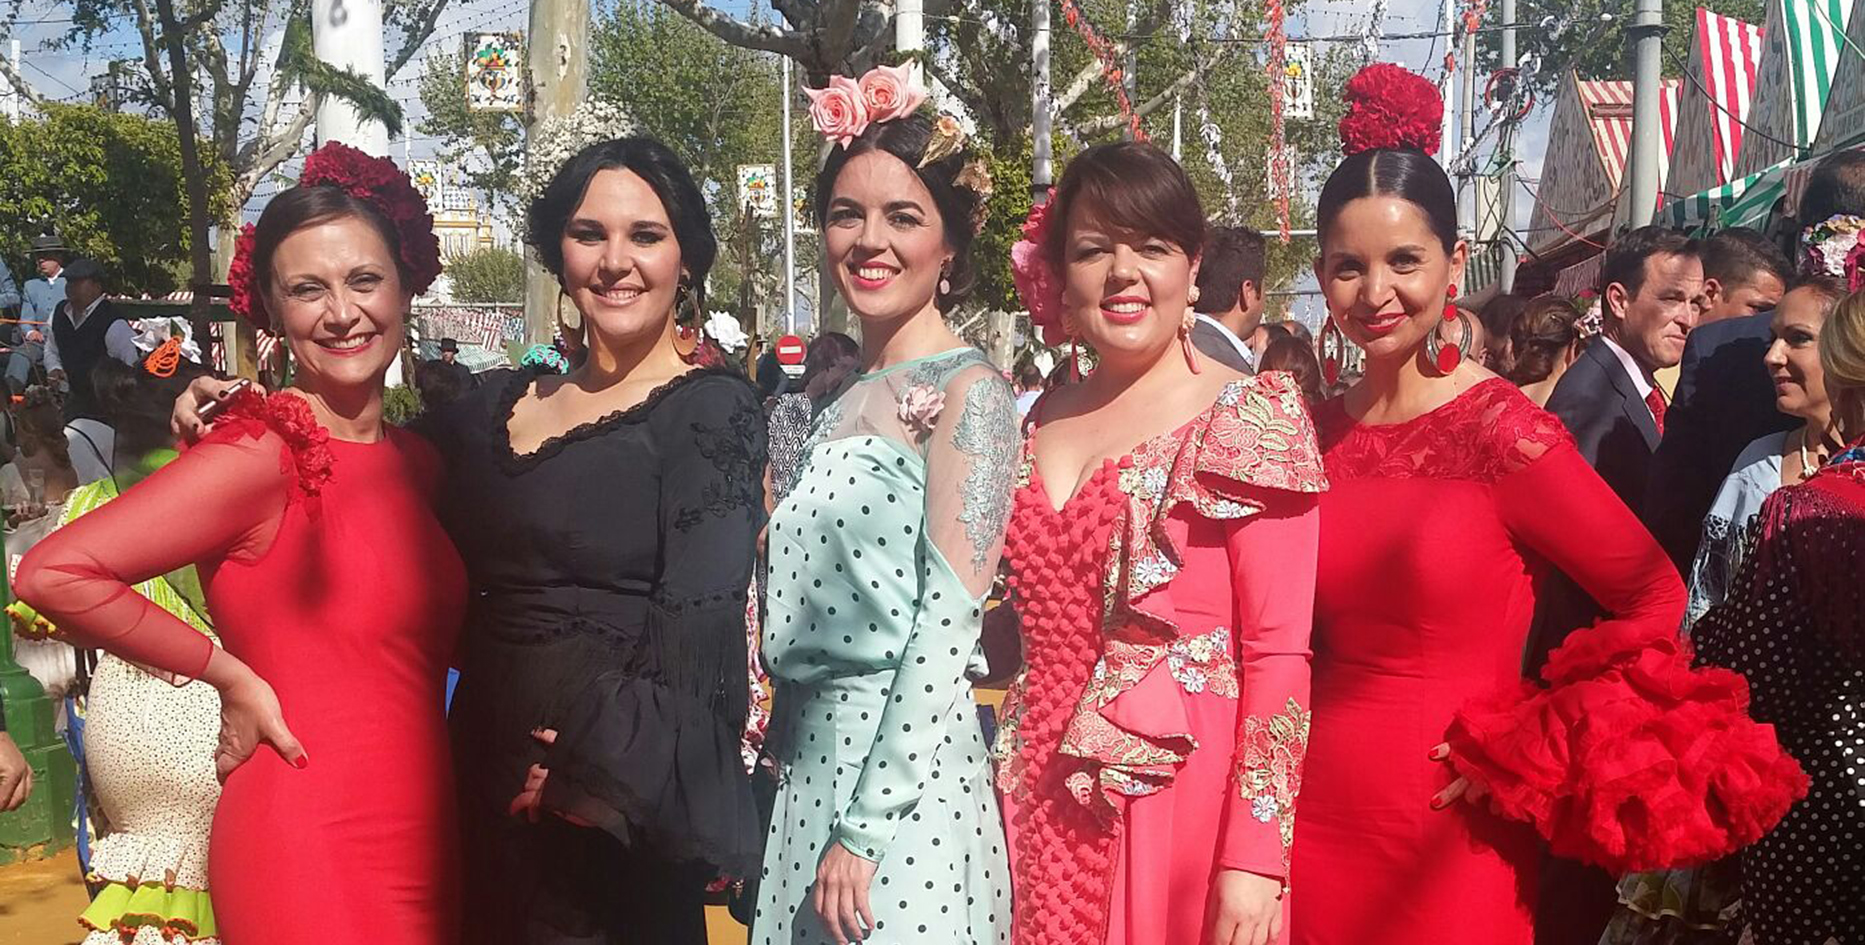 Flamencas en la Feria de Sevilla 2016